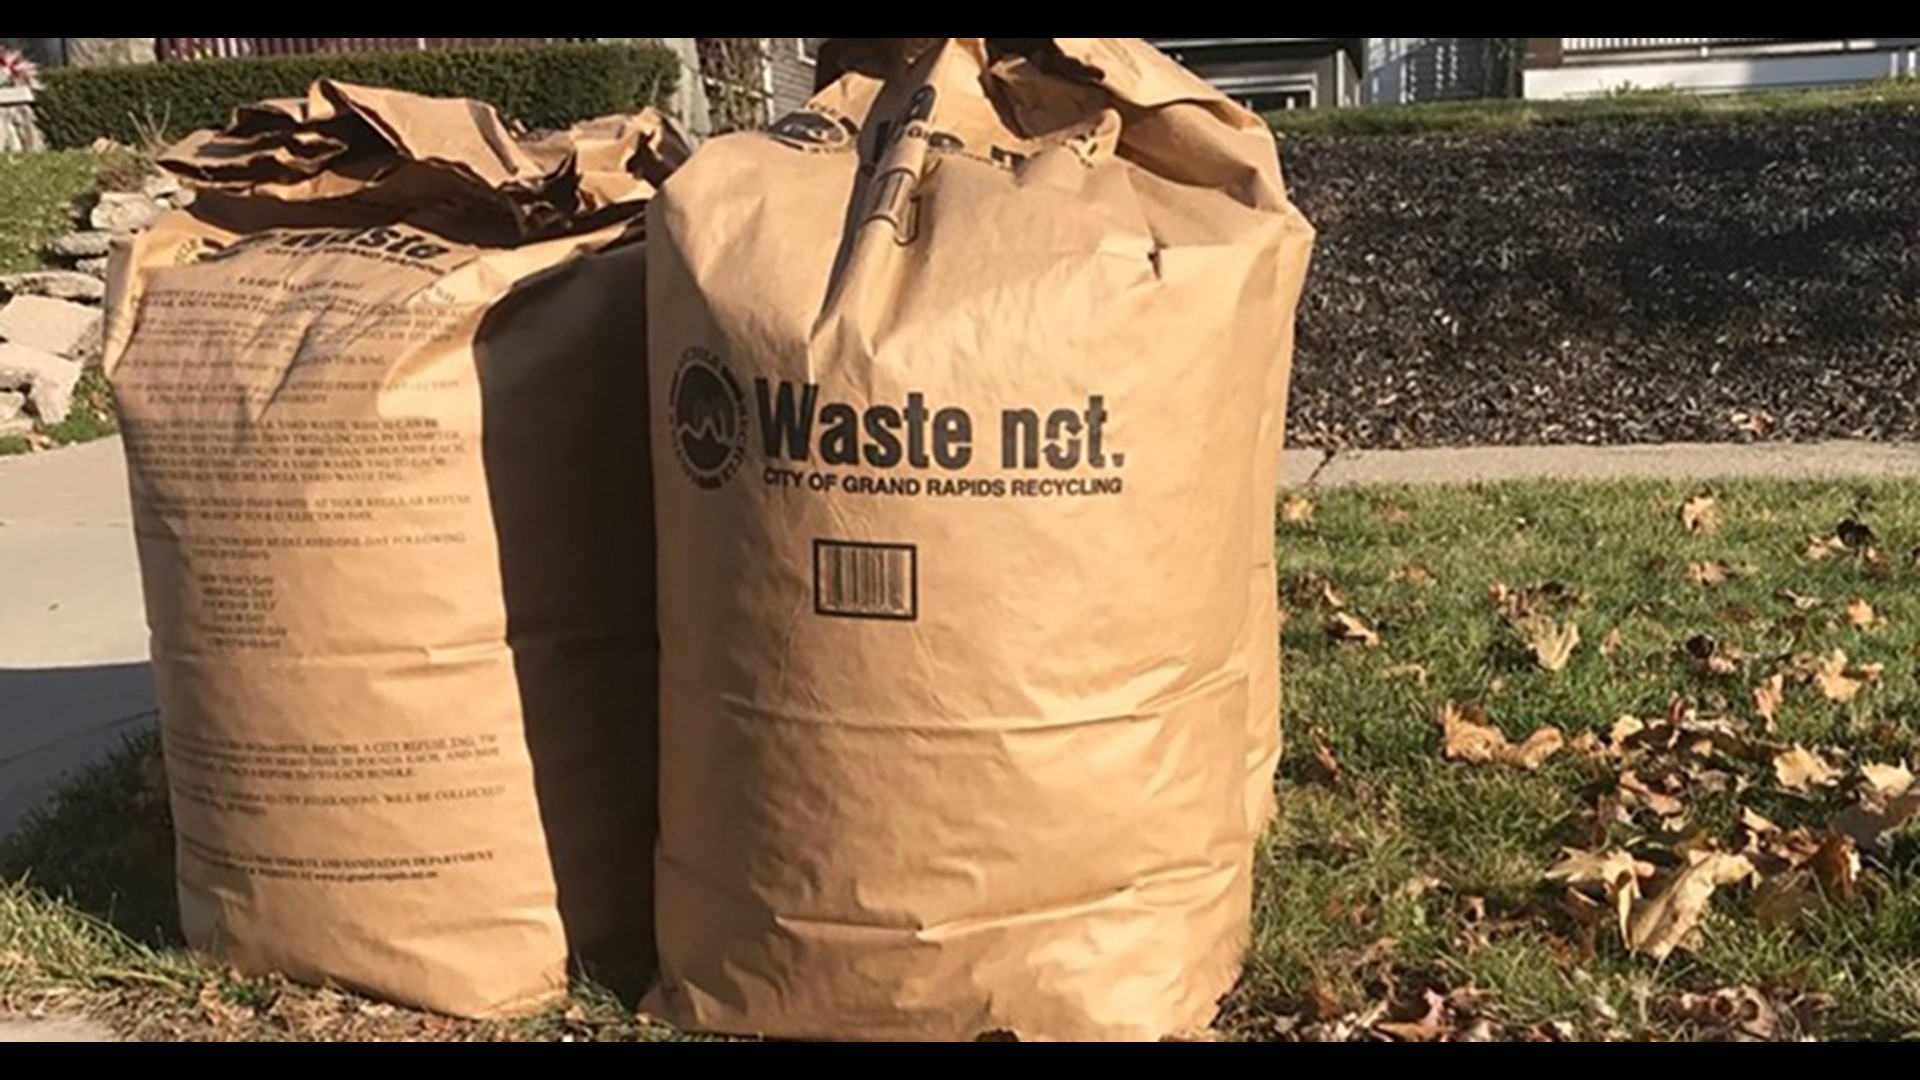 Curbside yard waste pickup begins in April for Grand Rapids